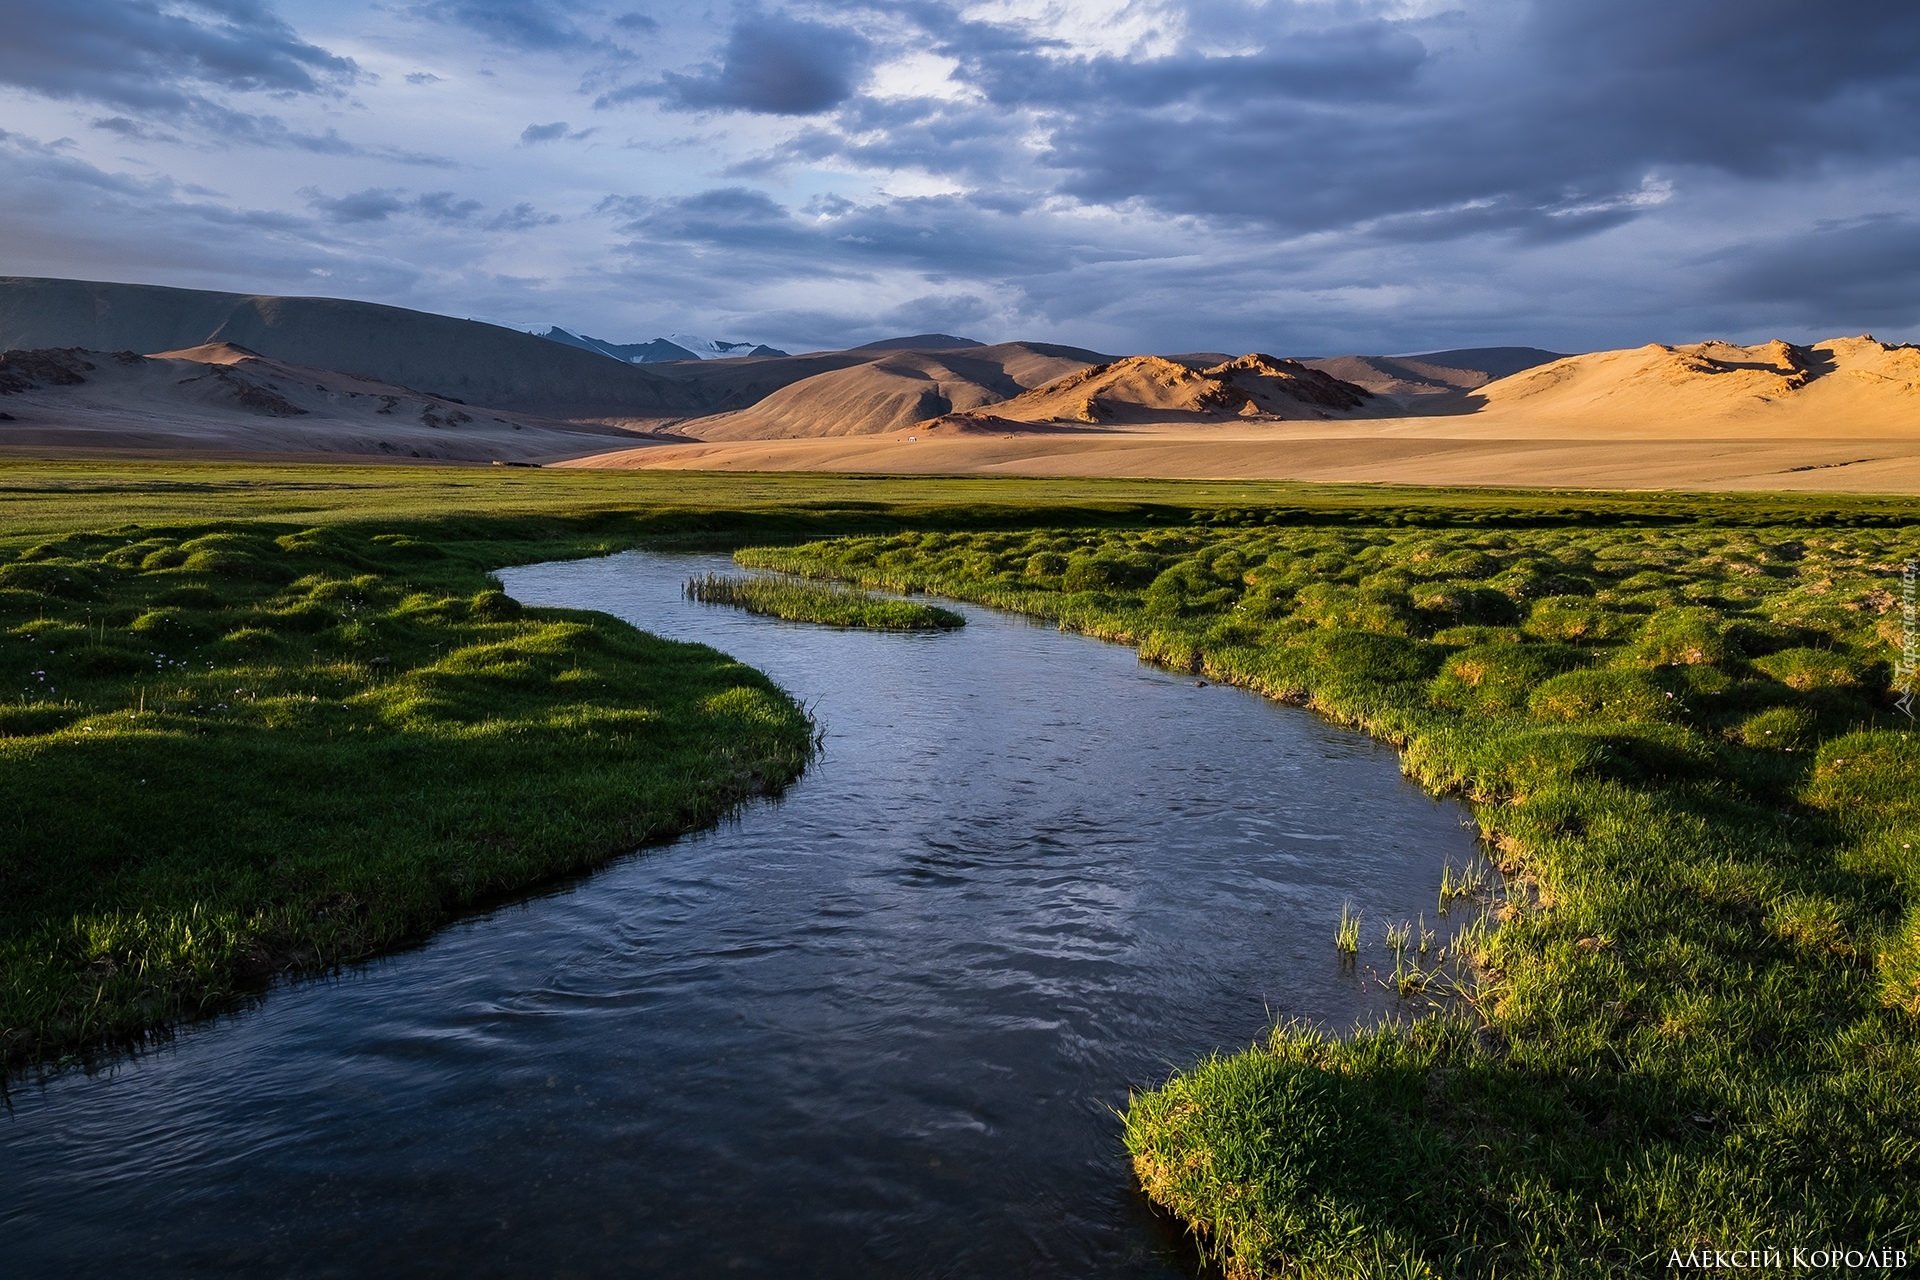 Rzeka, Łąki, Góry, Ałtaj Mongolski, Mongolia